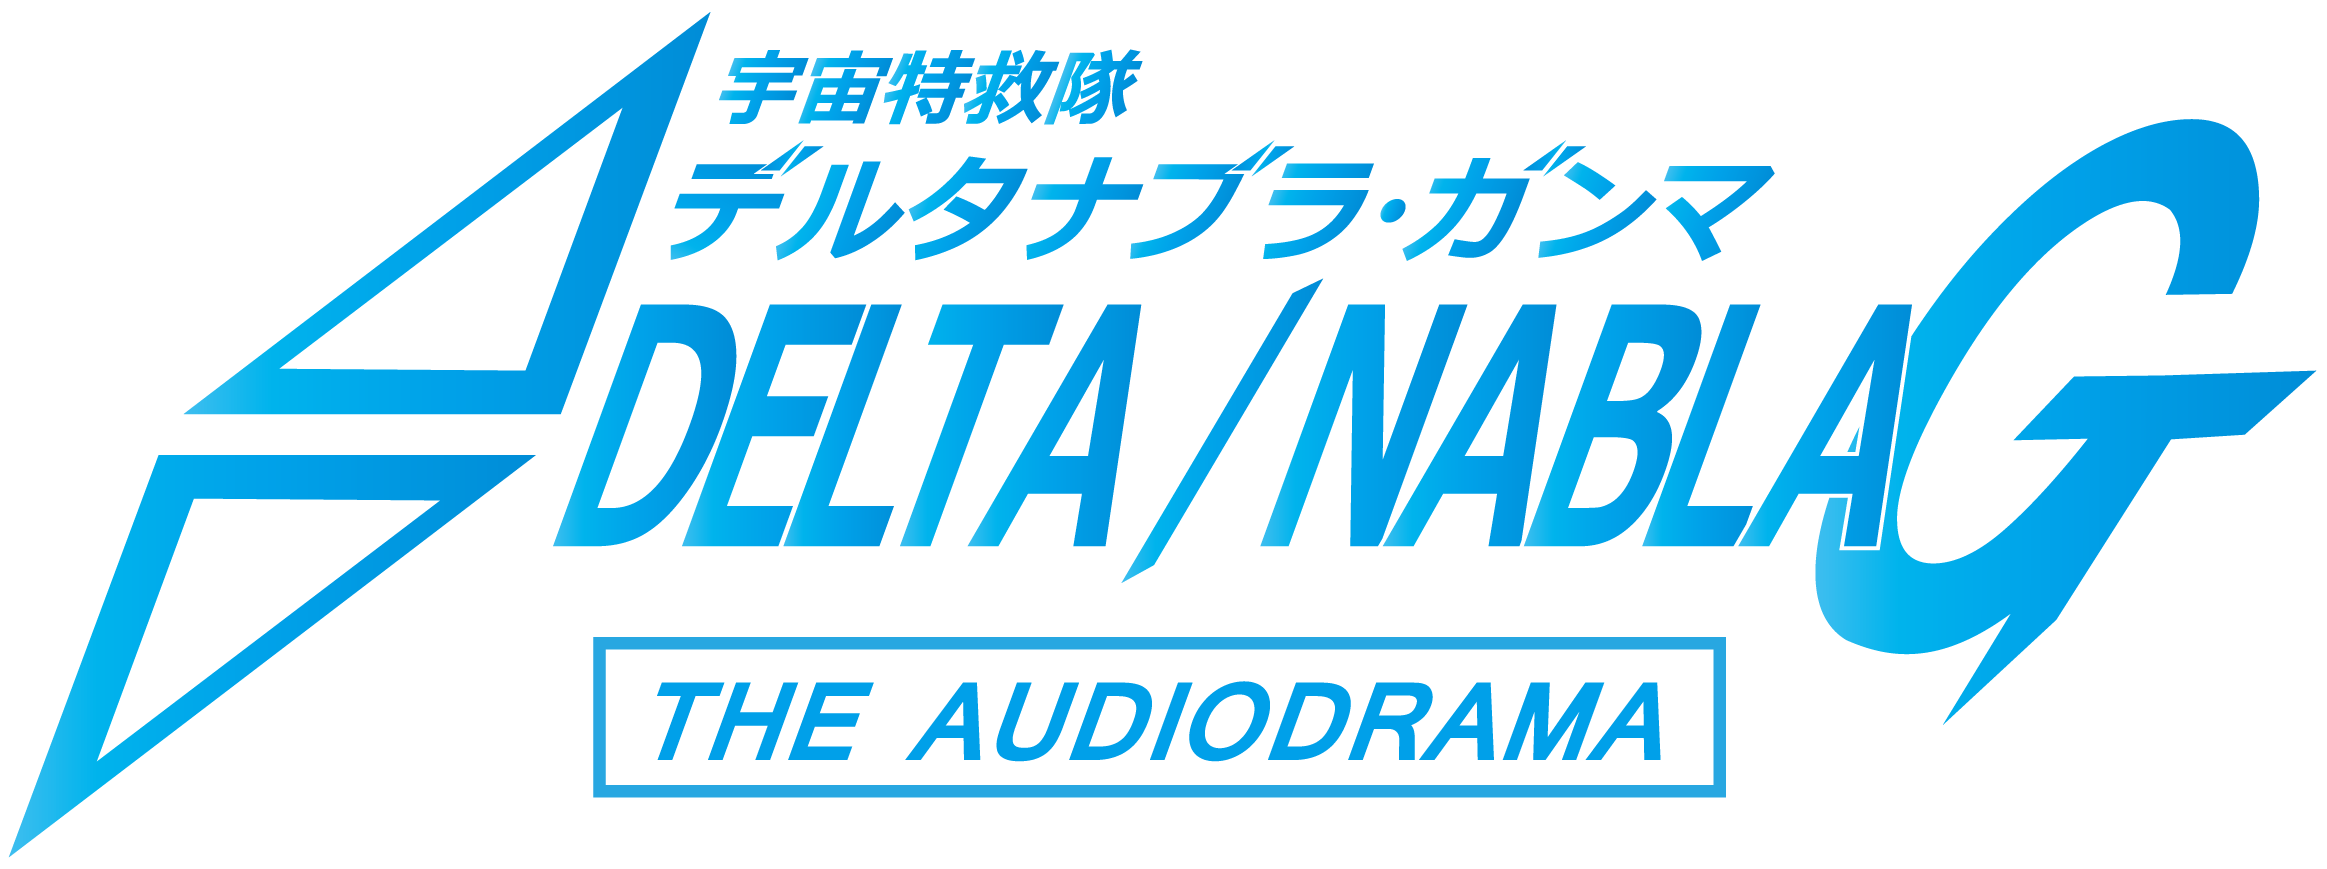 DELTA NABLA G logo no-c